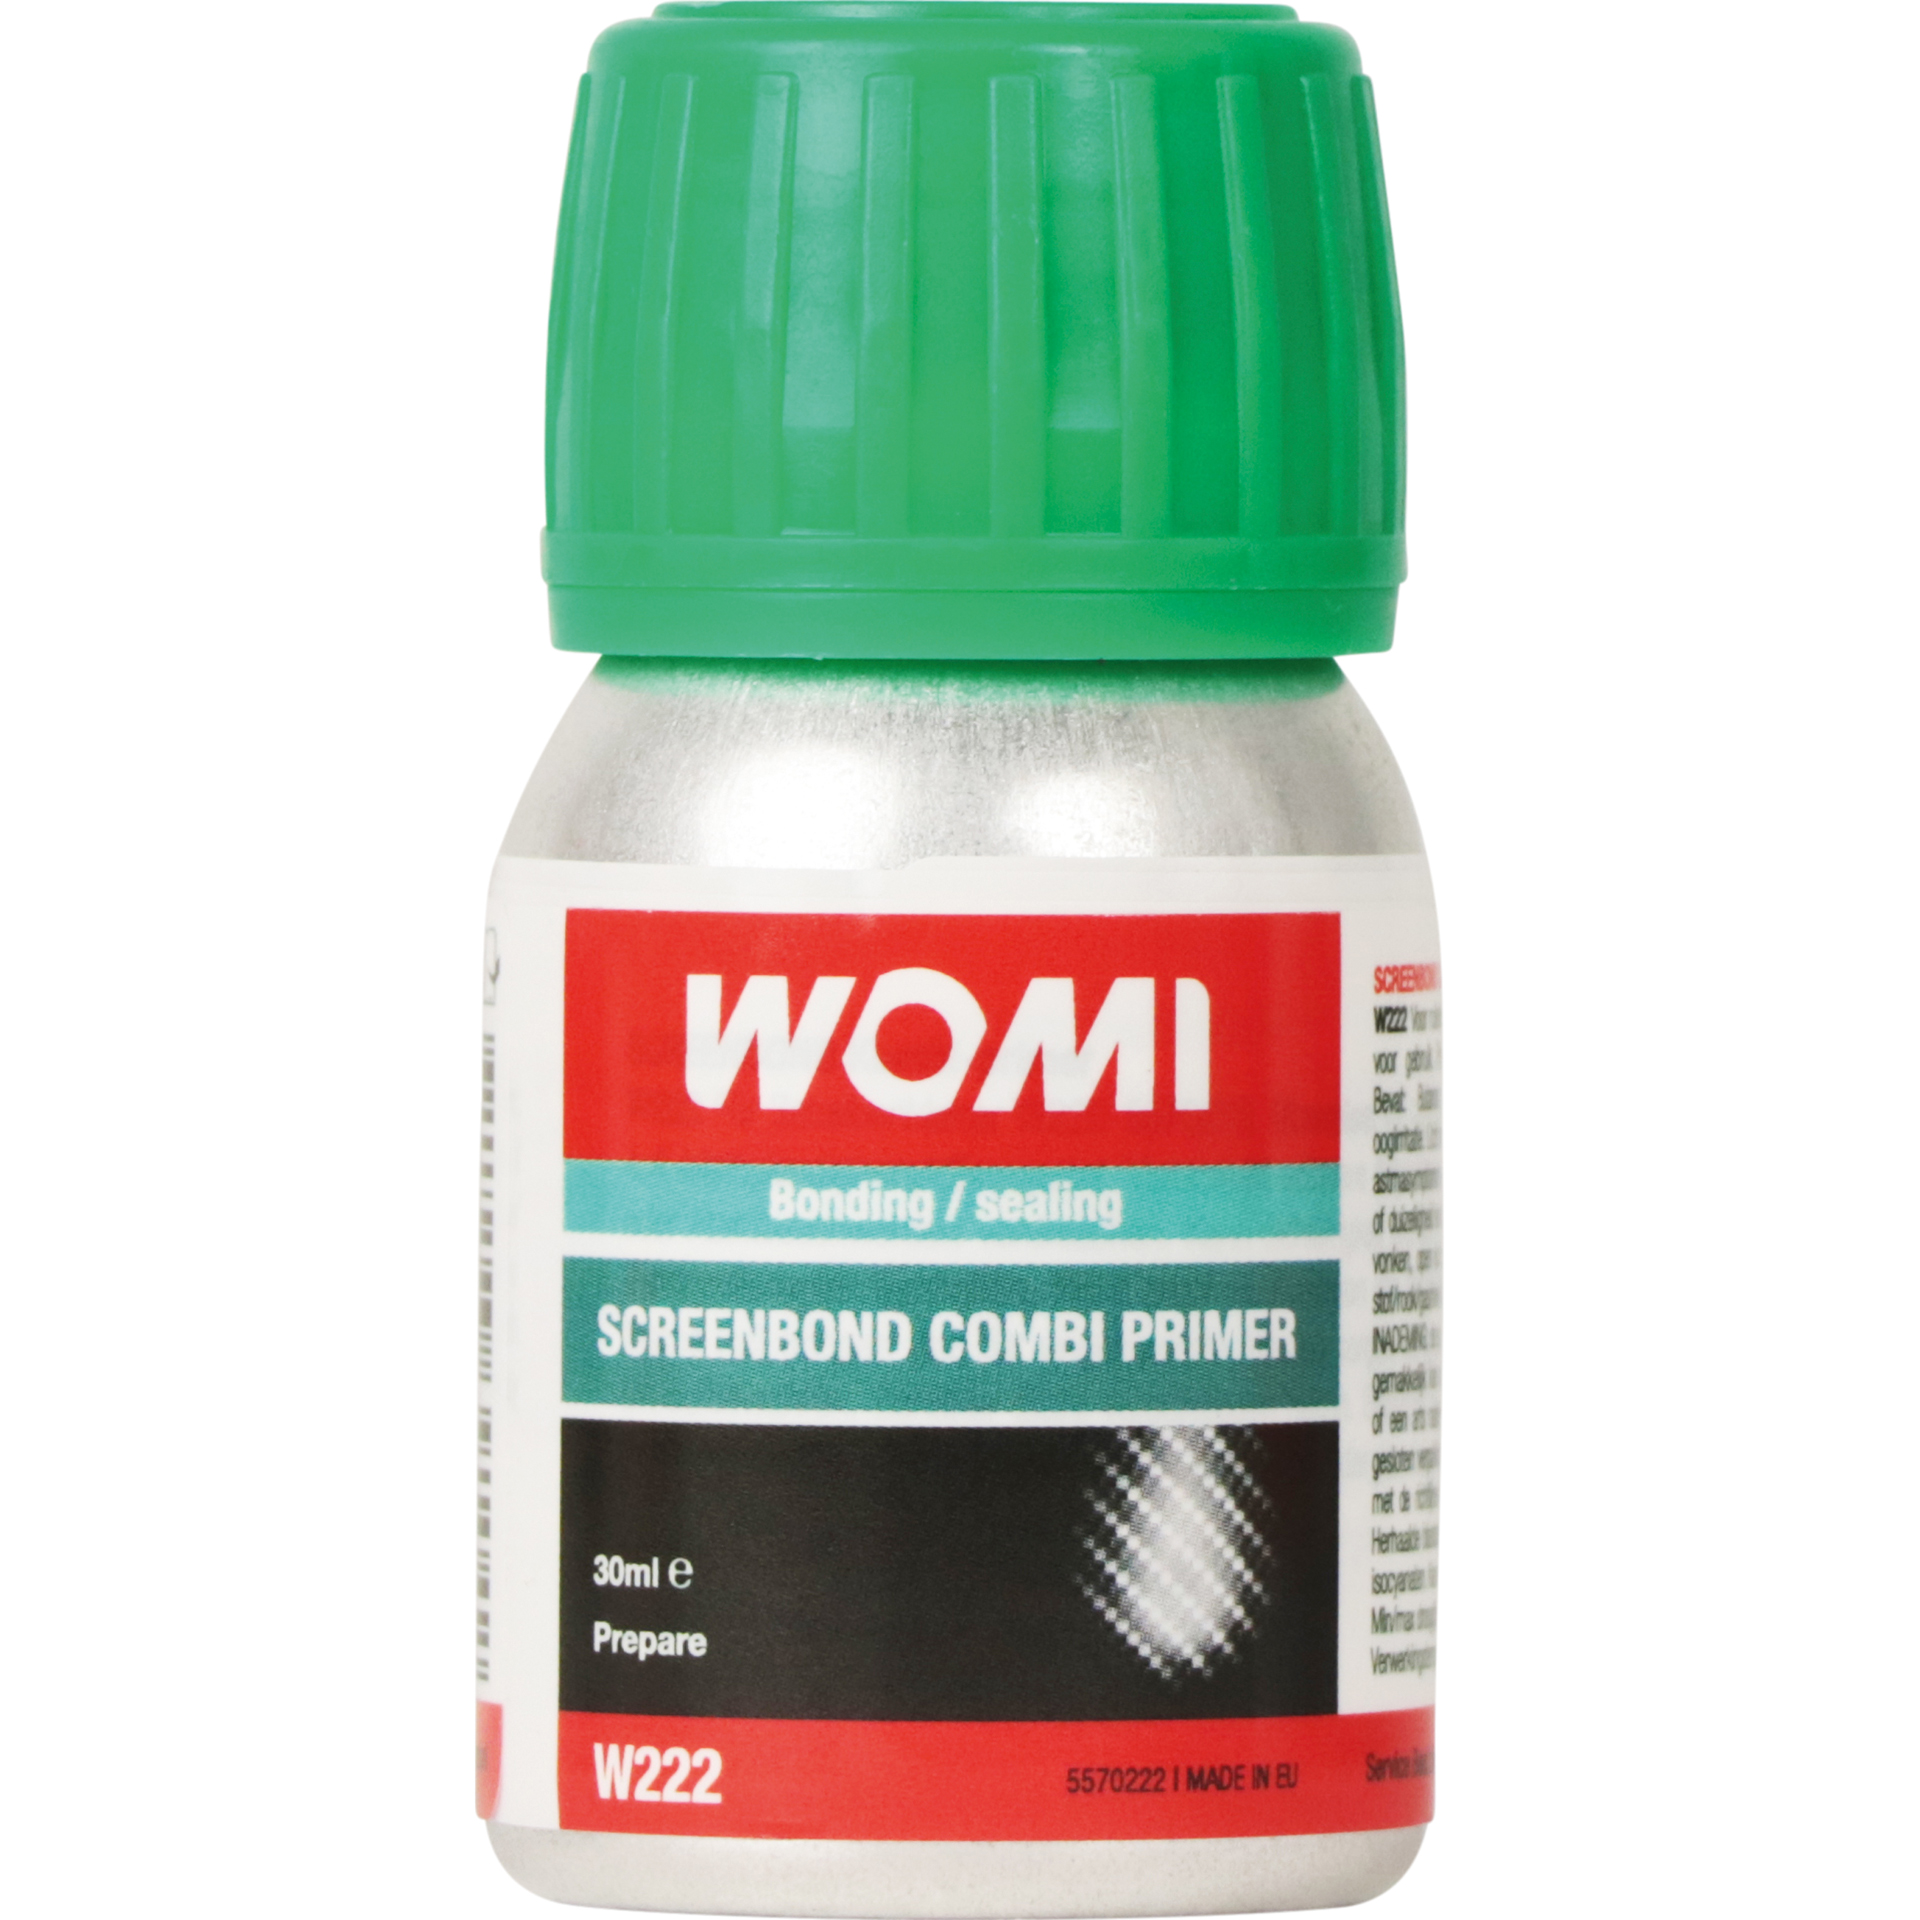 Womi Womi W222 Screenbond Combi Primer 30ml  5570222